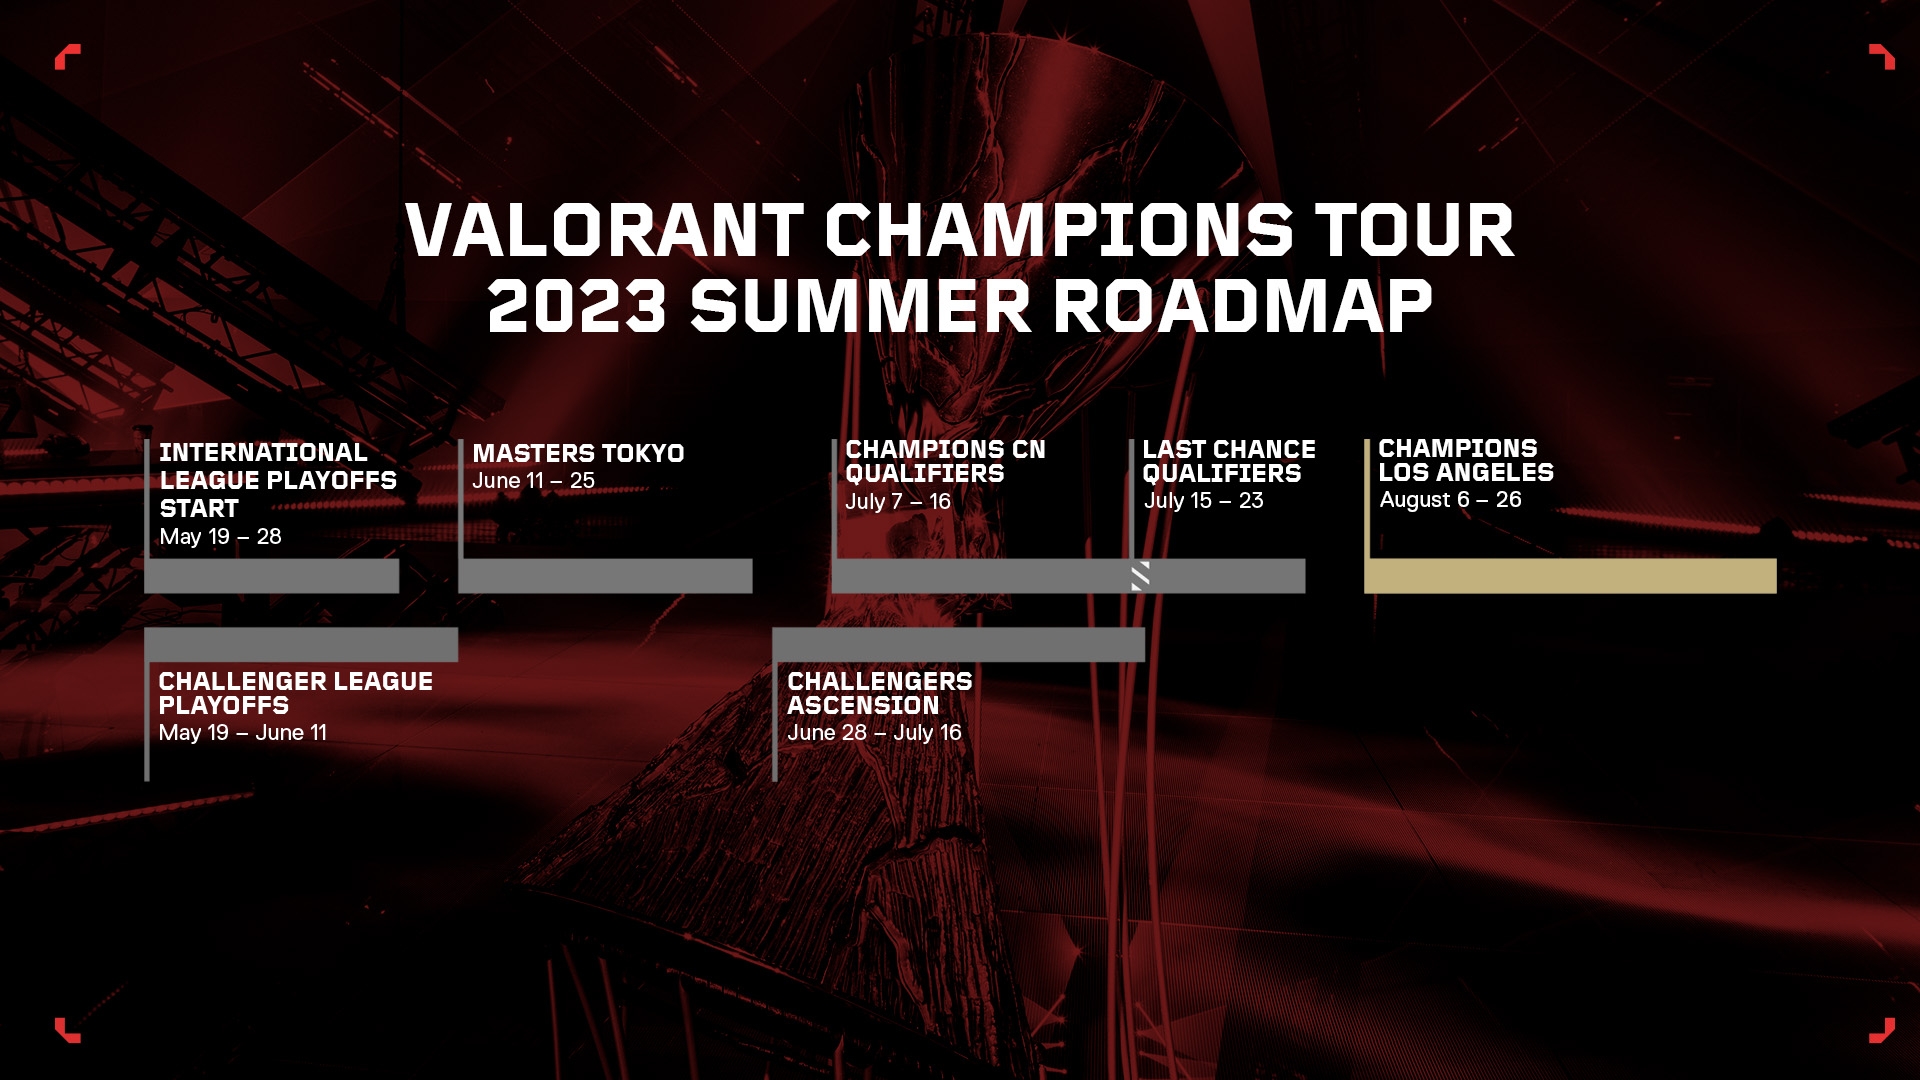 Full lineup of Valorant Champions 2023 teams